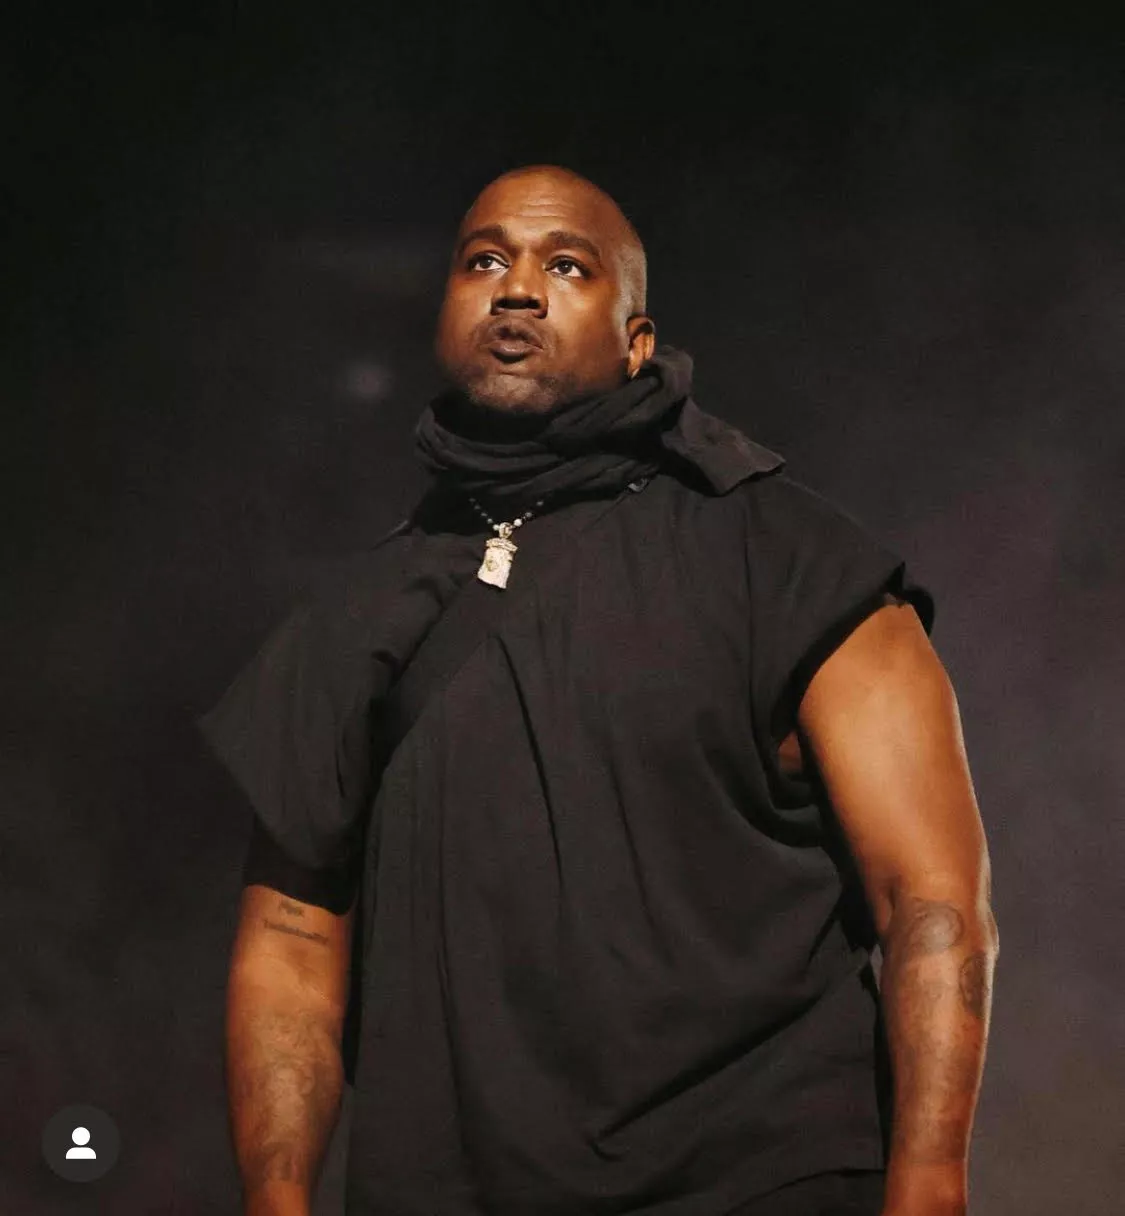 Il nuovo album di Kanye “Ye” West in arrivo